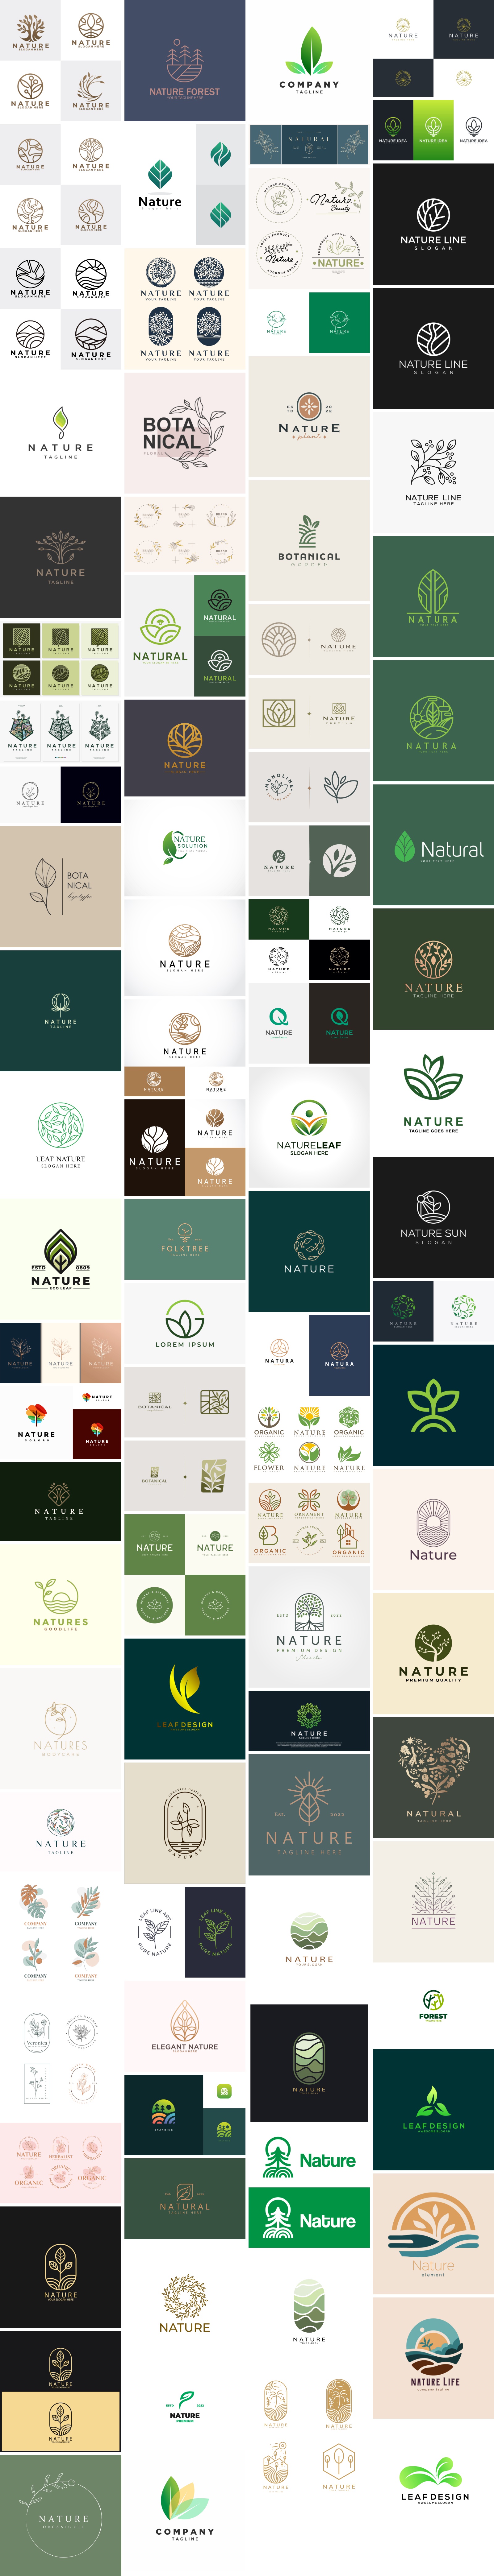 Nature Logos Stock Vector Collections-1.jpg